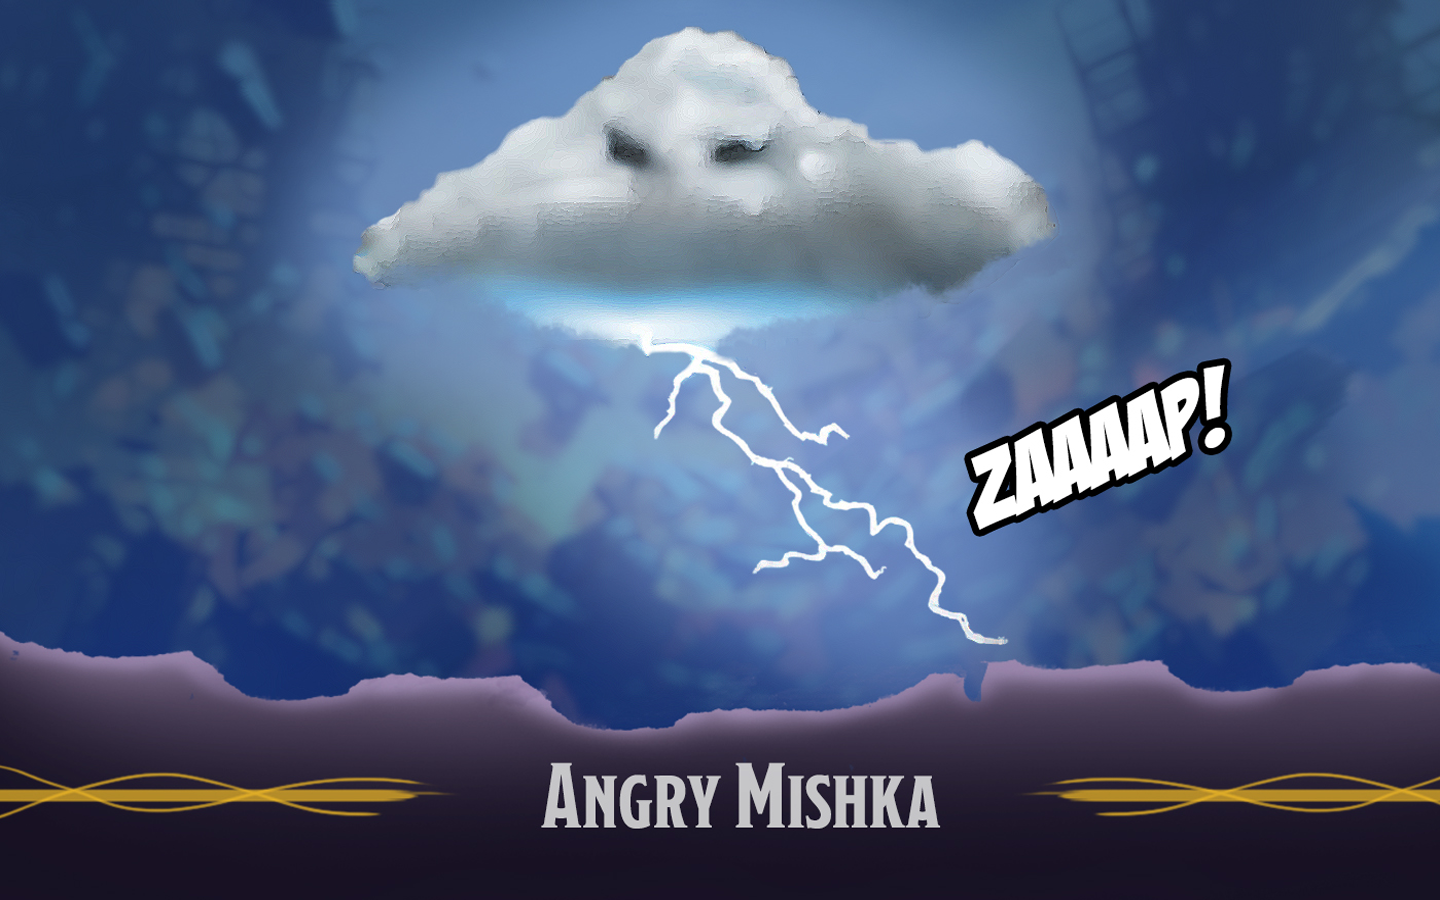 Angry Mishka – A charmingly annoying D&D NPC